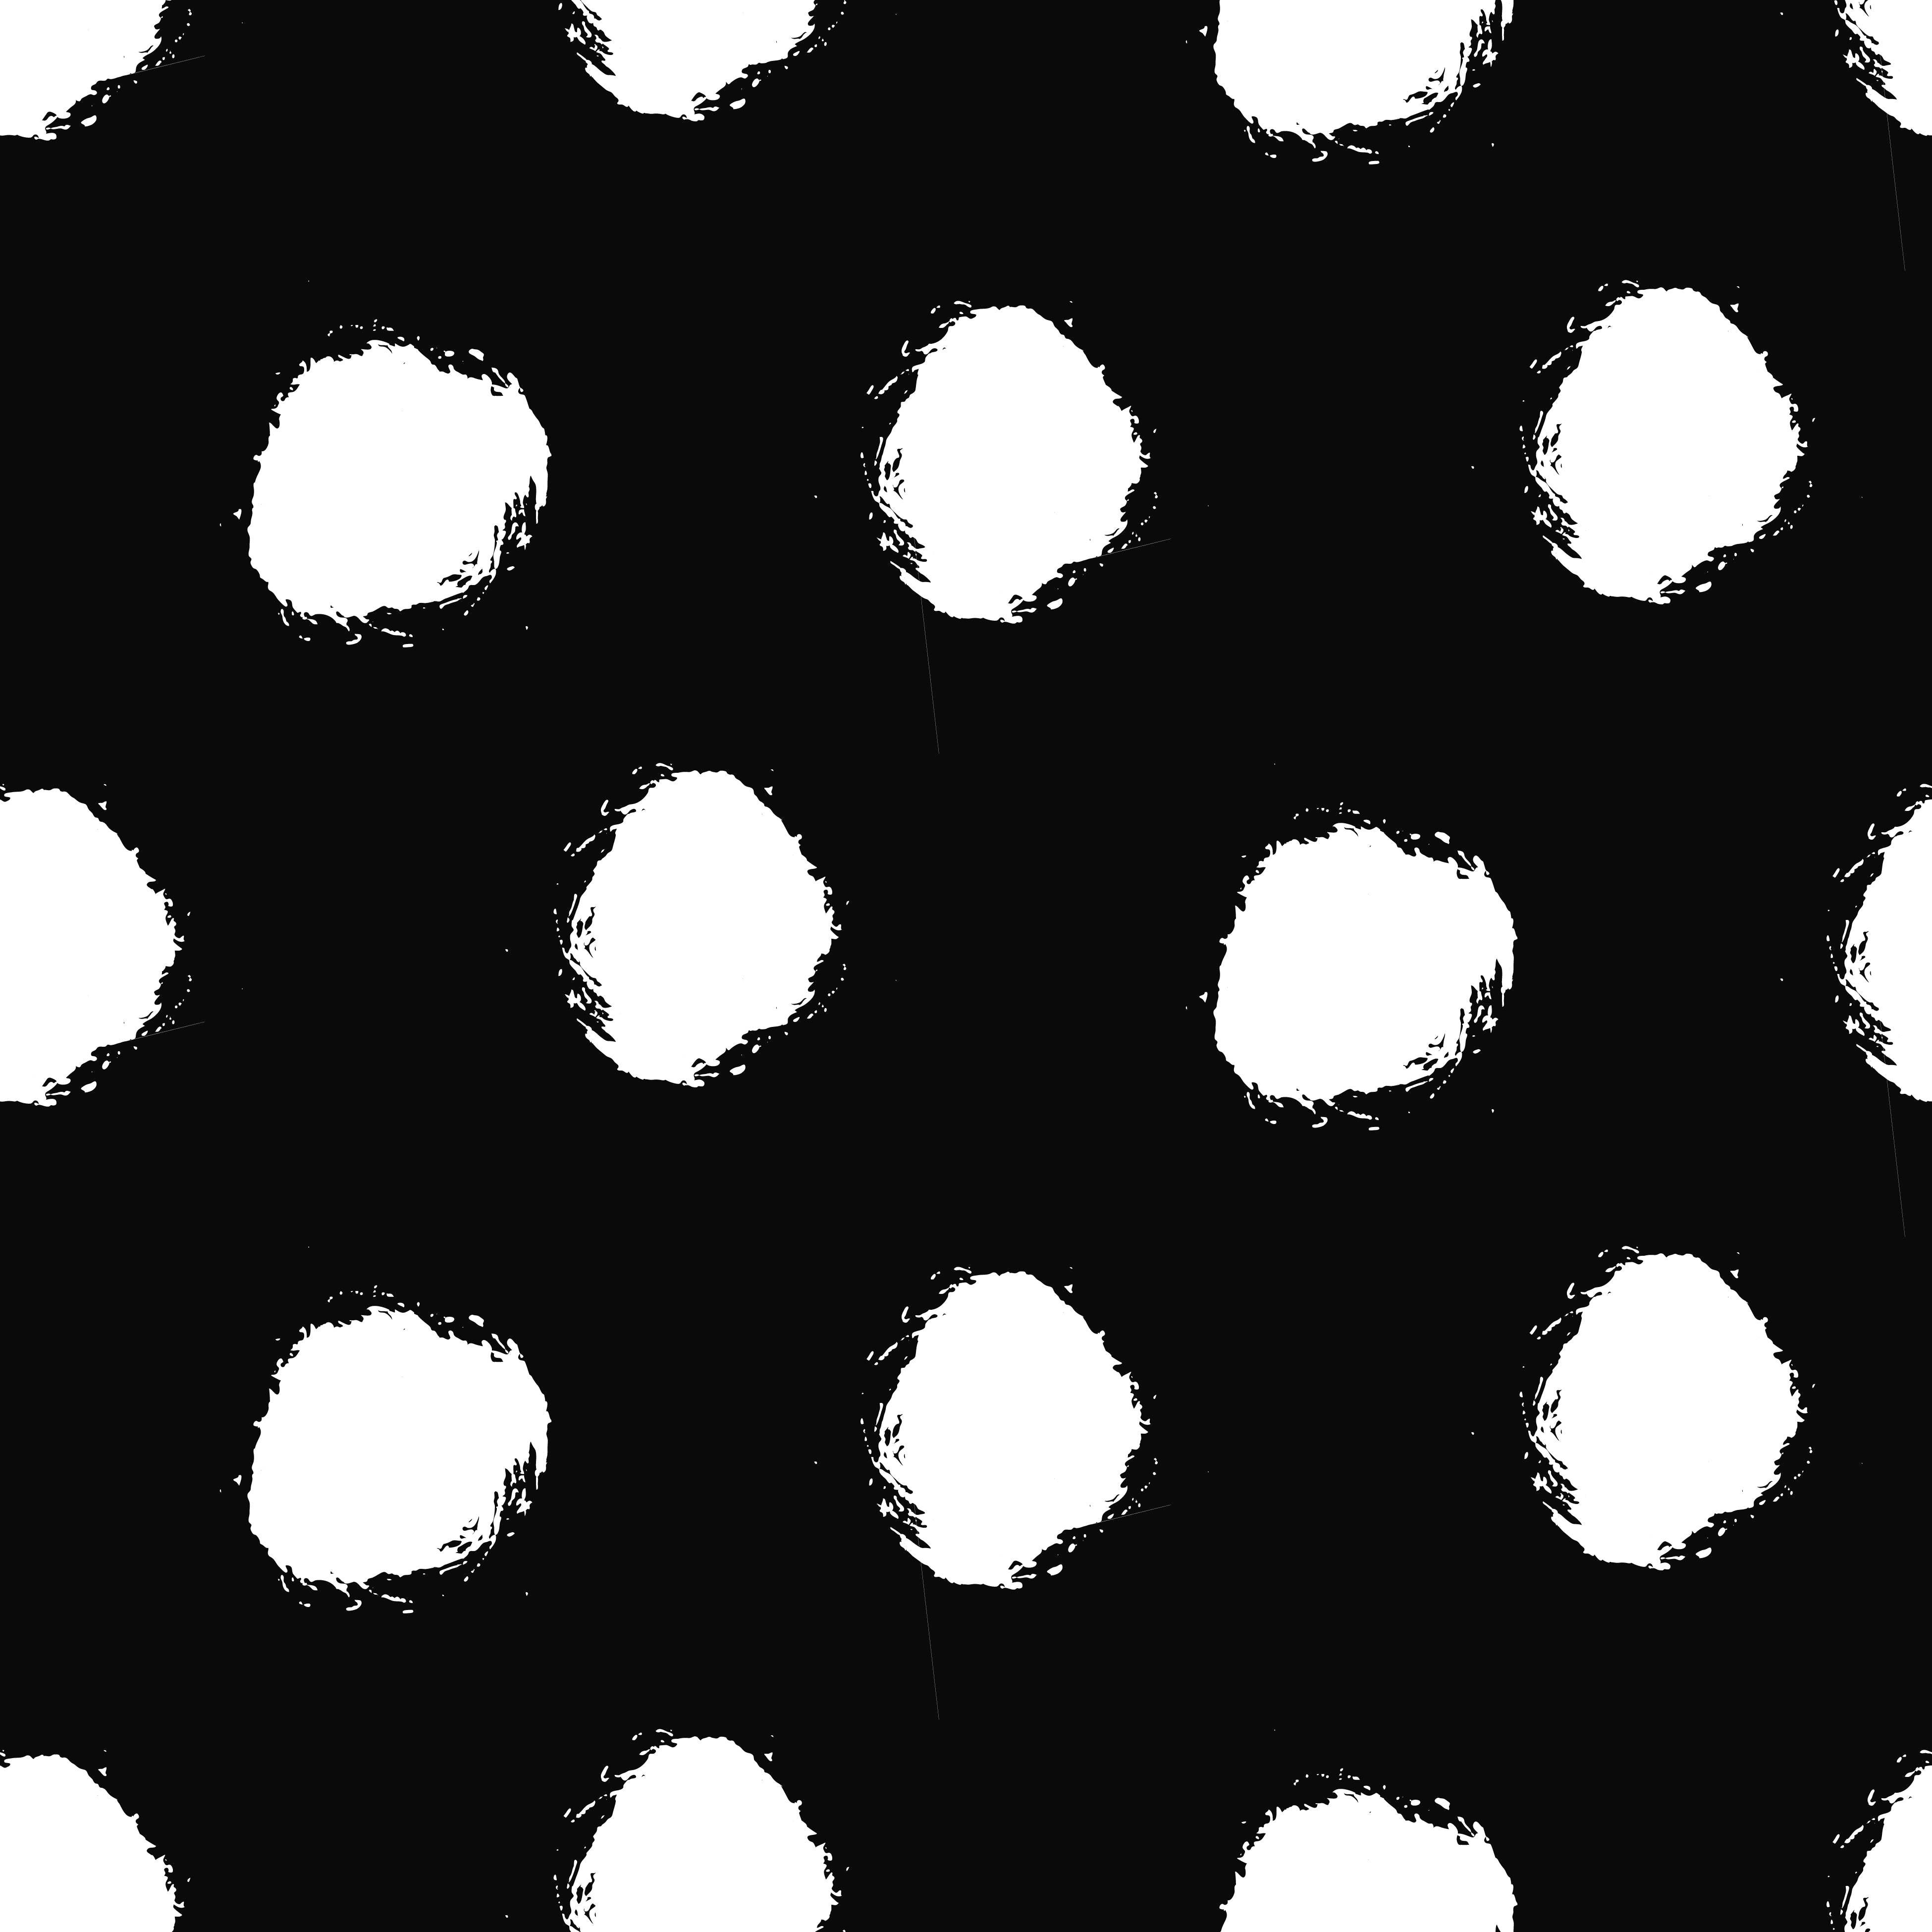 Polka Dots Pattern